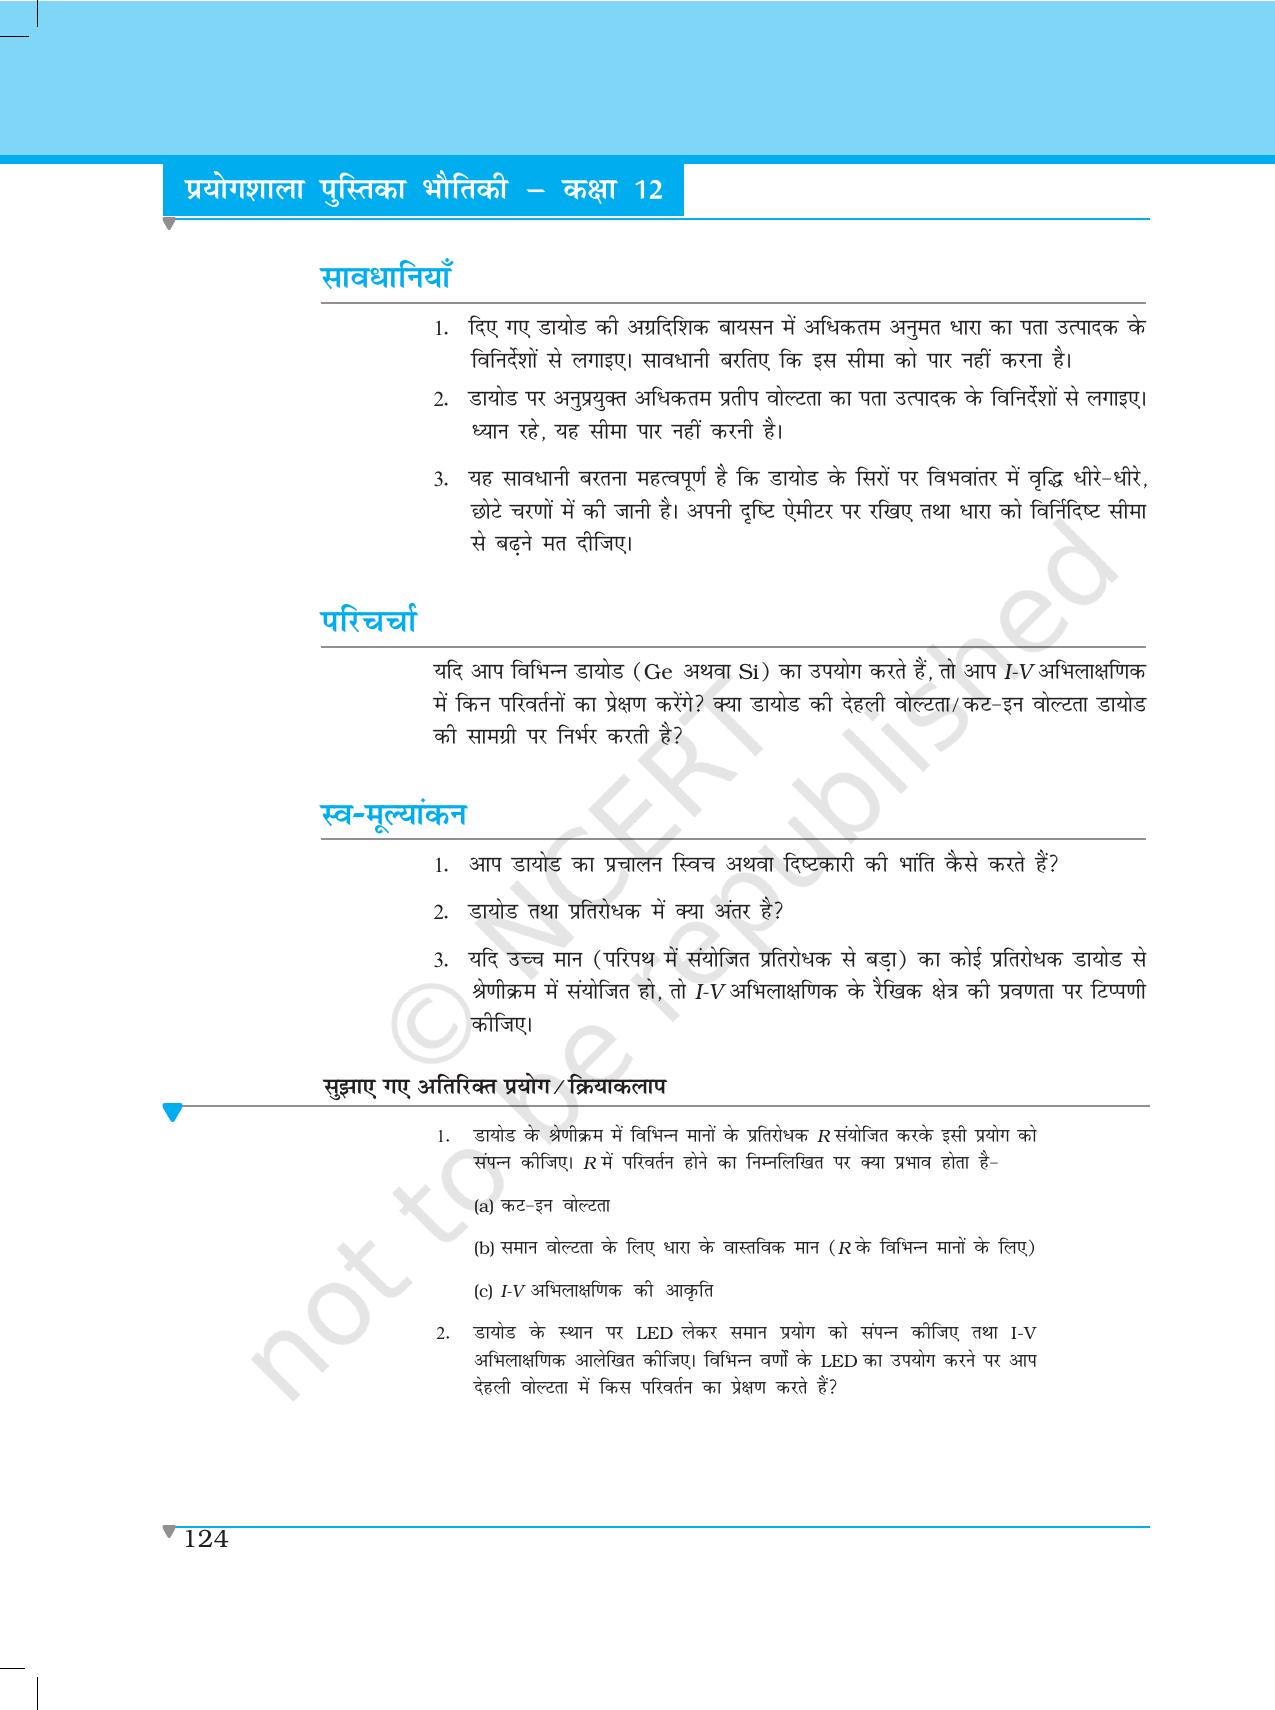 NCERT Laboratory Manuals for Class XII भौतिकी - प्रयोग (14 - 18) - Page 20